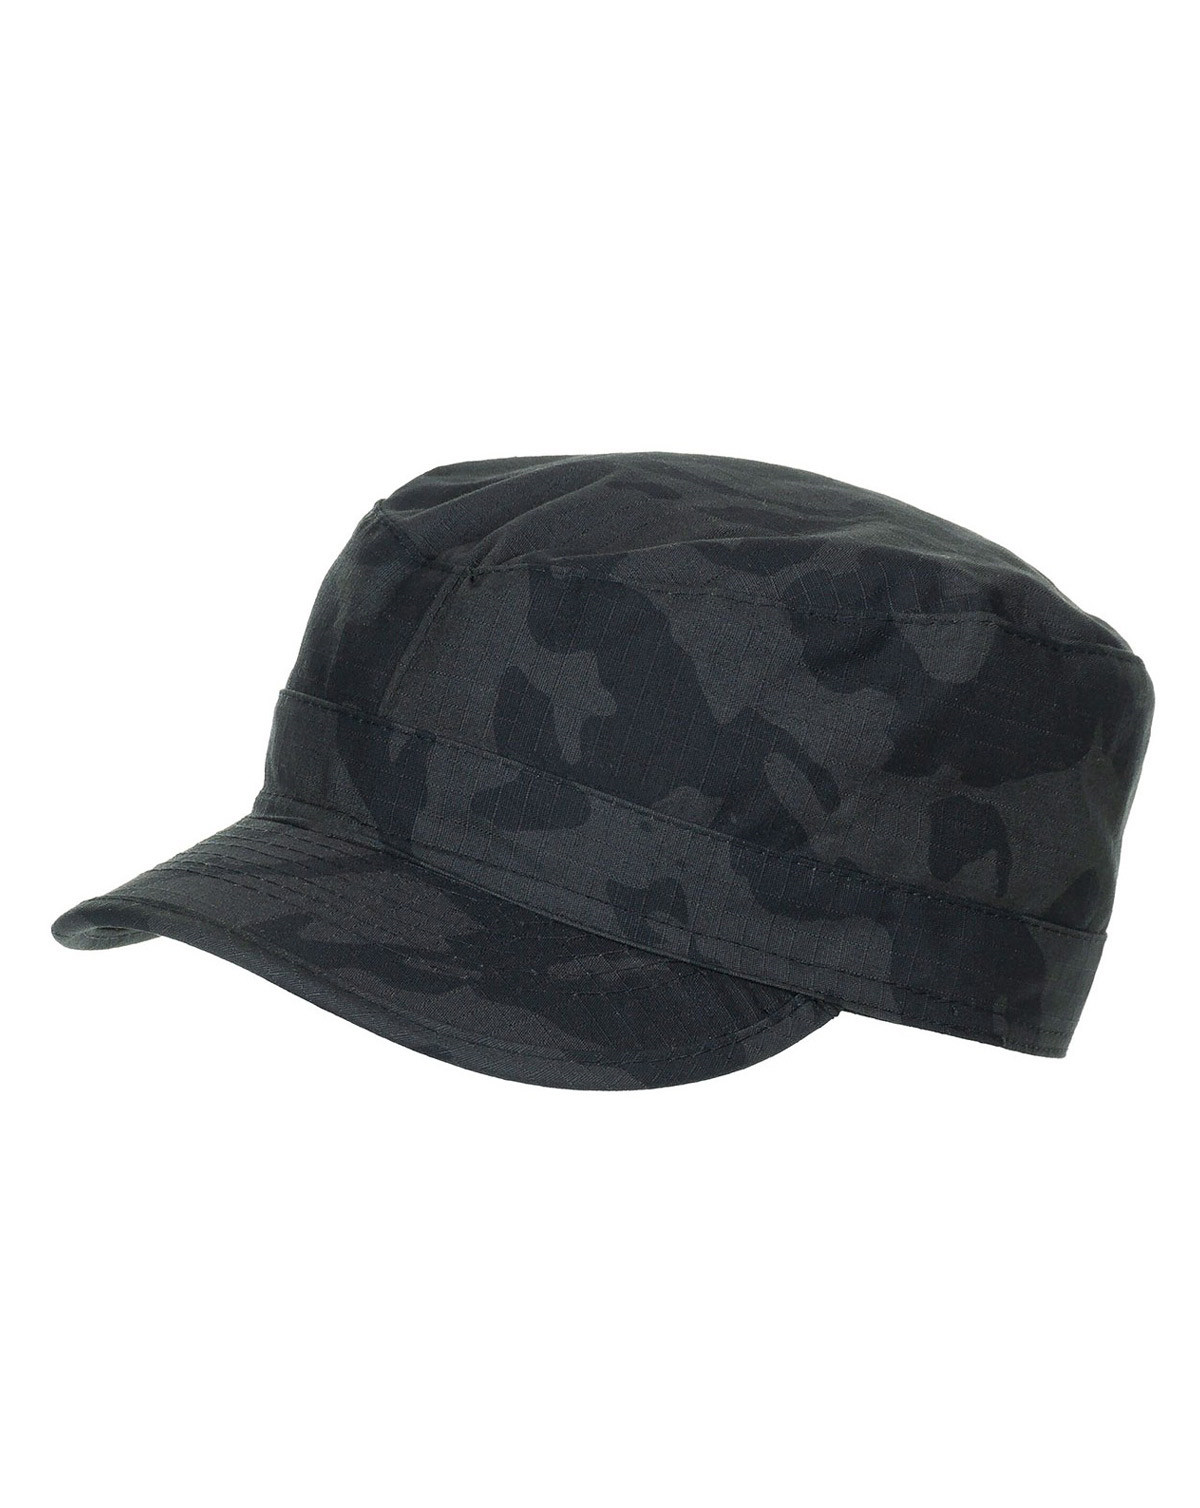 MFH U.S. Army Caps, div. Camouflager (Black Camo, L)